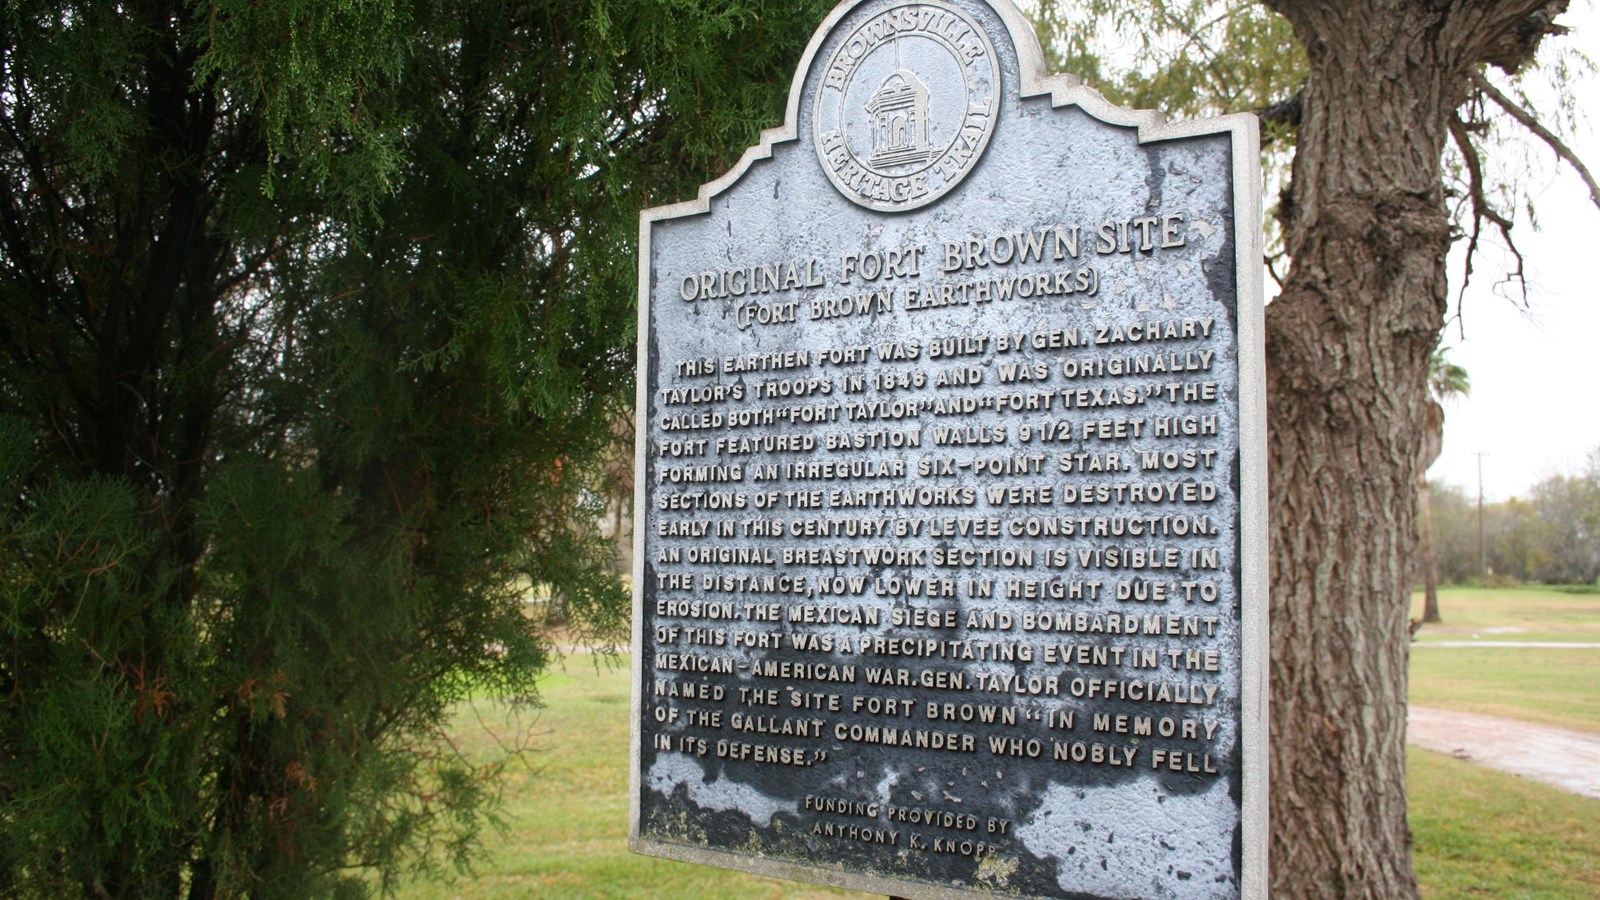 Memorial plaque for original Fort Brown site.